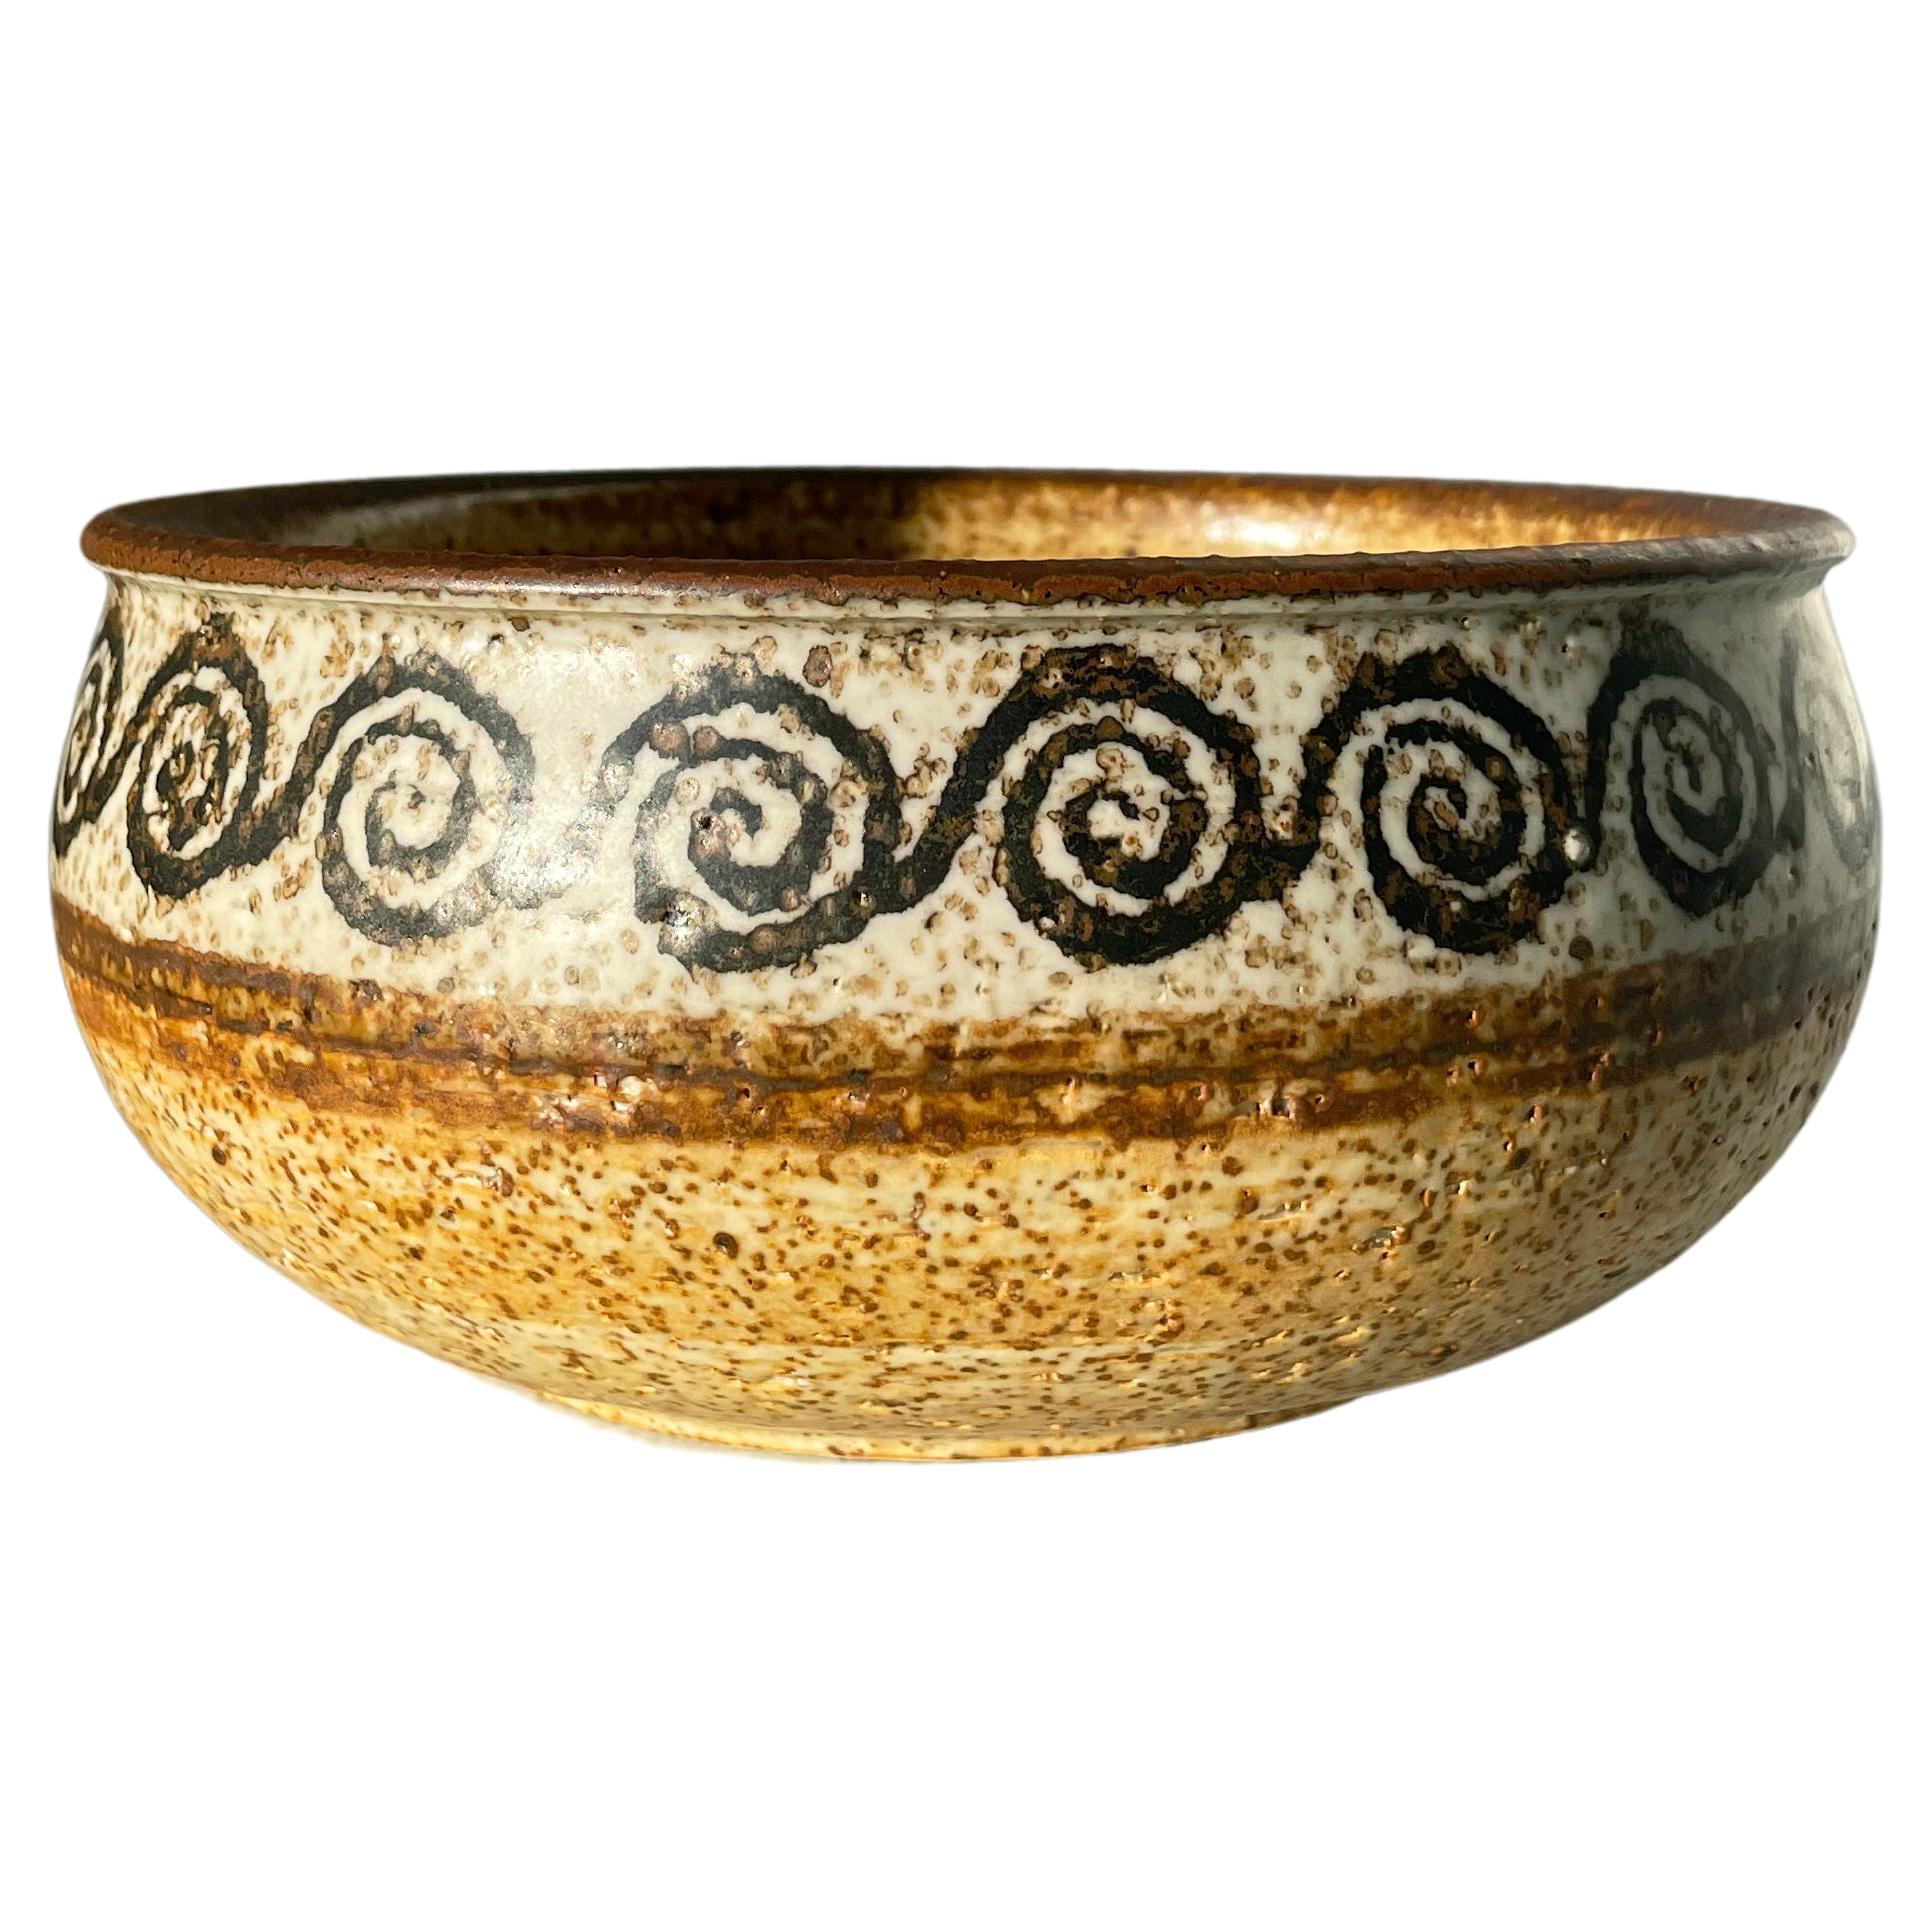 Rörstrand Drejargruppen Ceramic Decorative Bowl, 1974